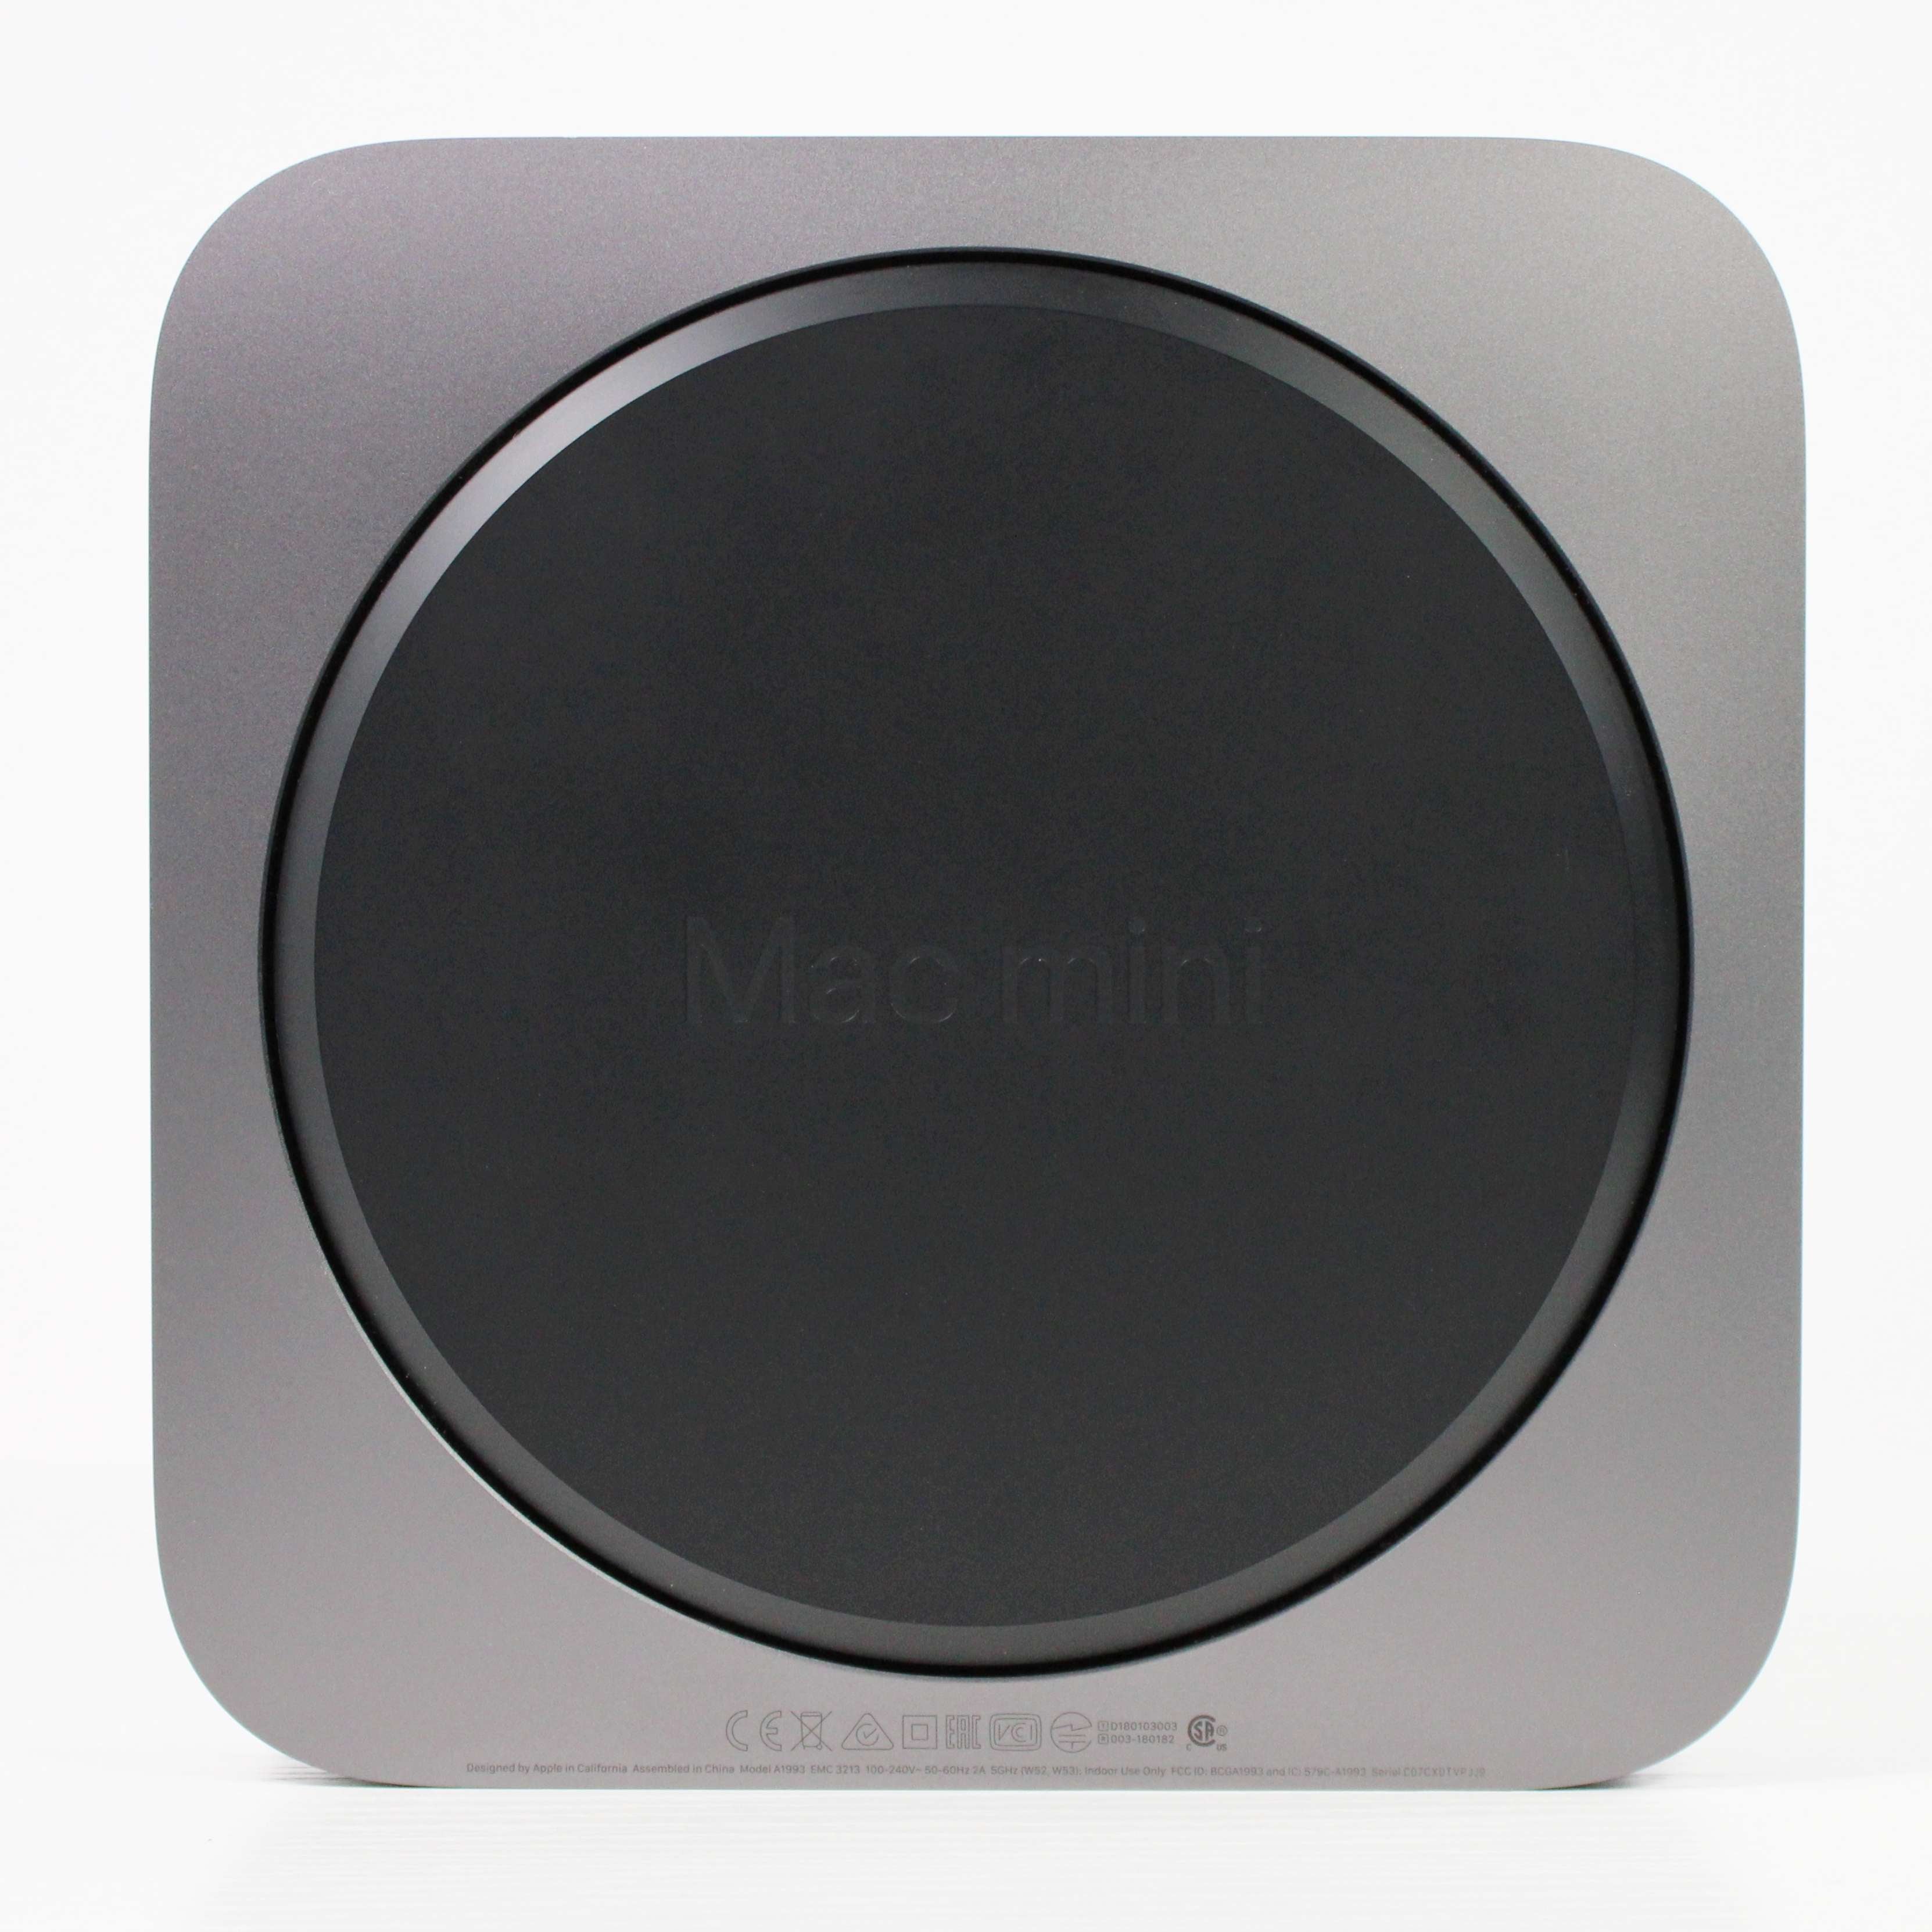 2018 Apple Mac Mini 3.2GHz 10GbE Core i7-8700B 1TB - 2TB Space Grey